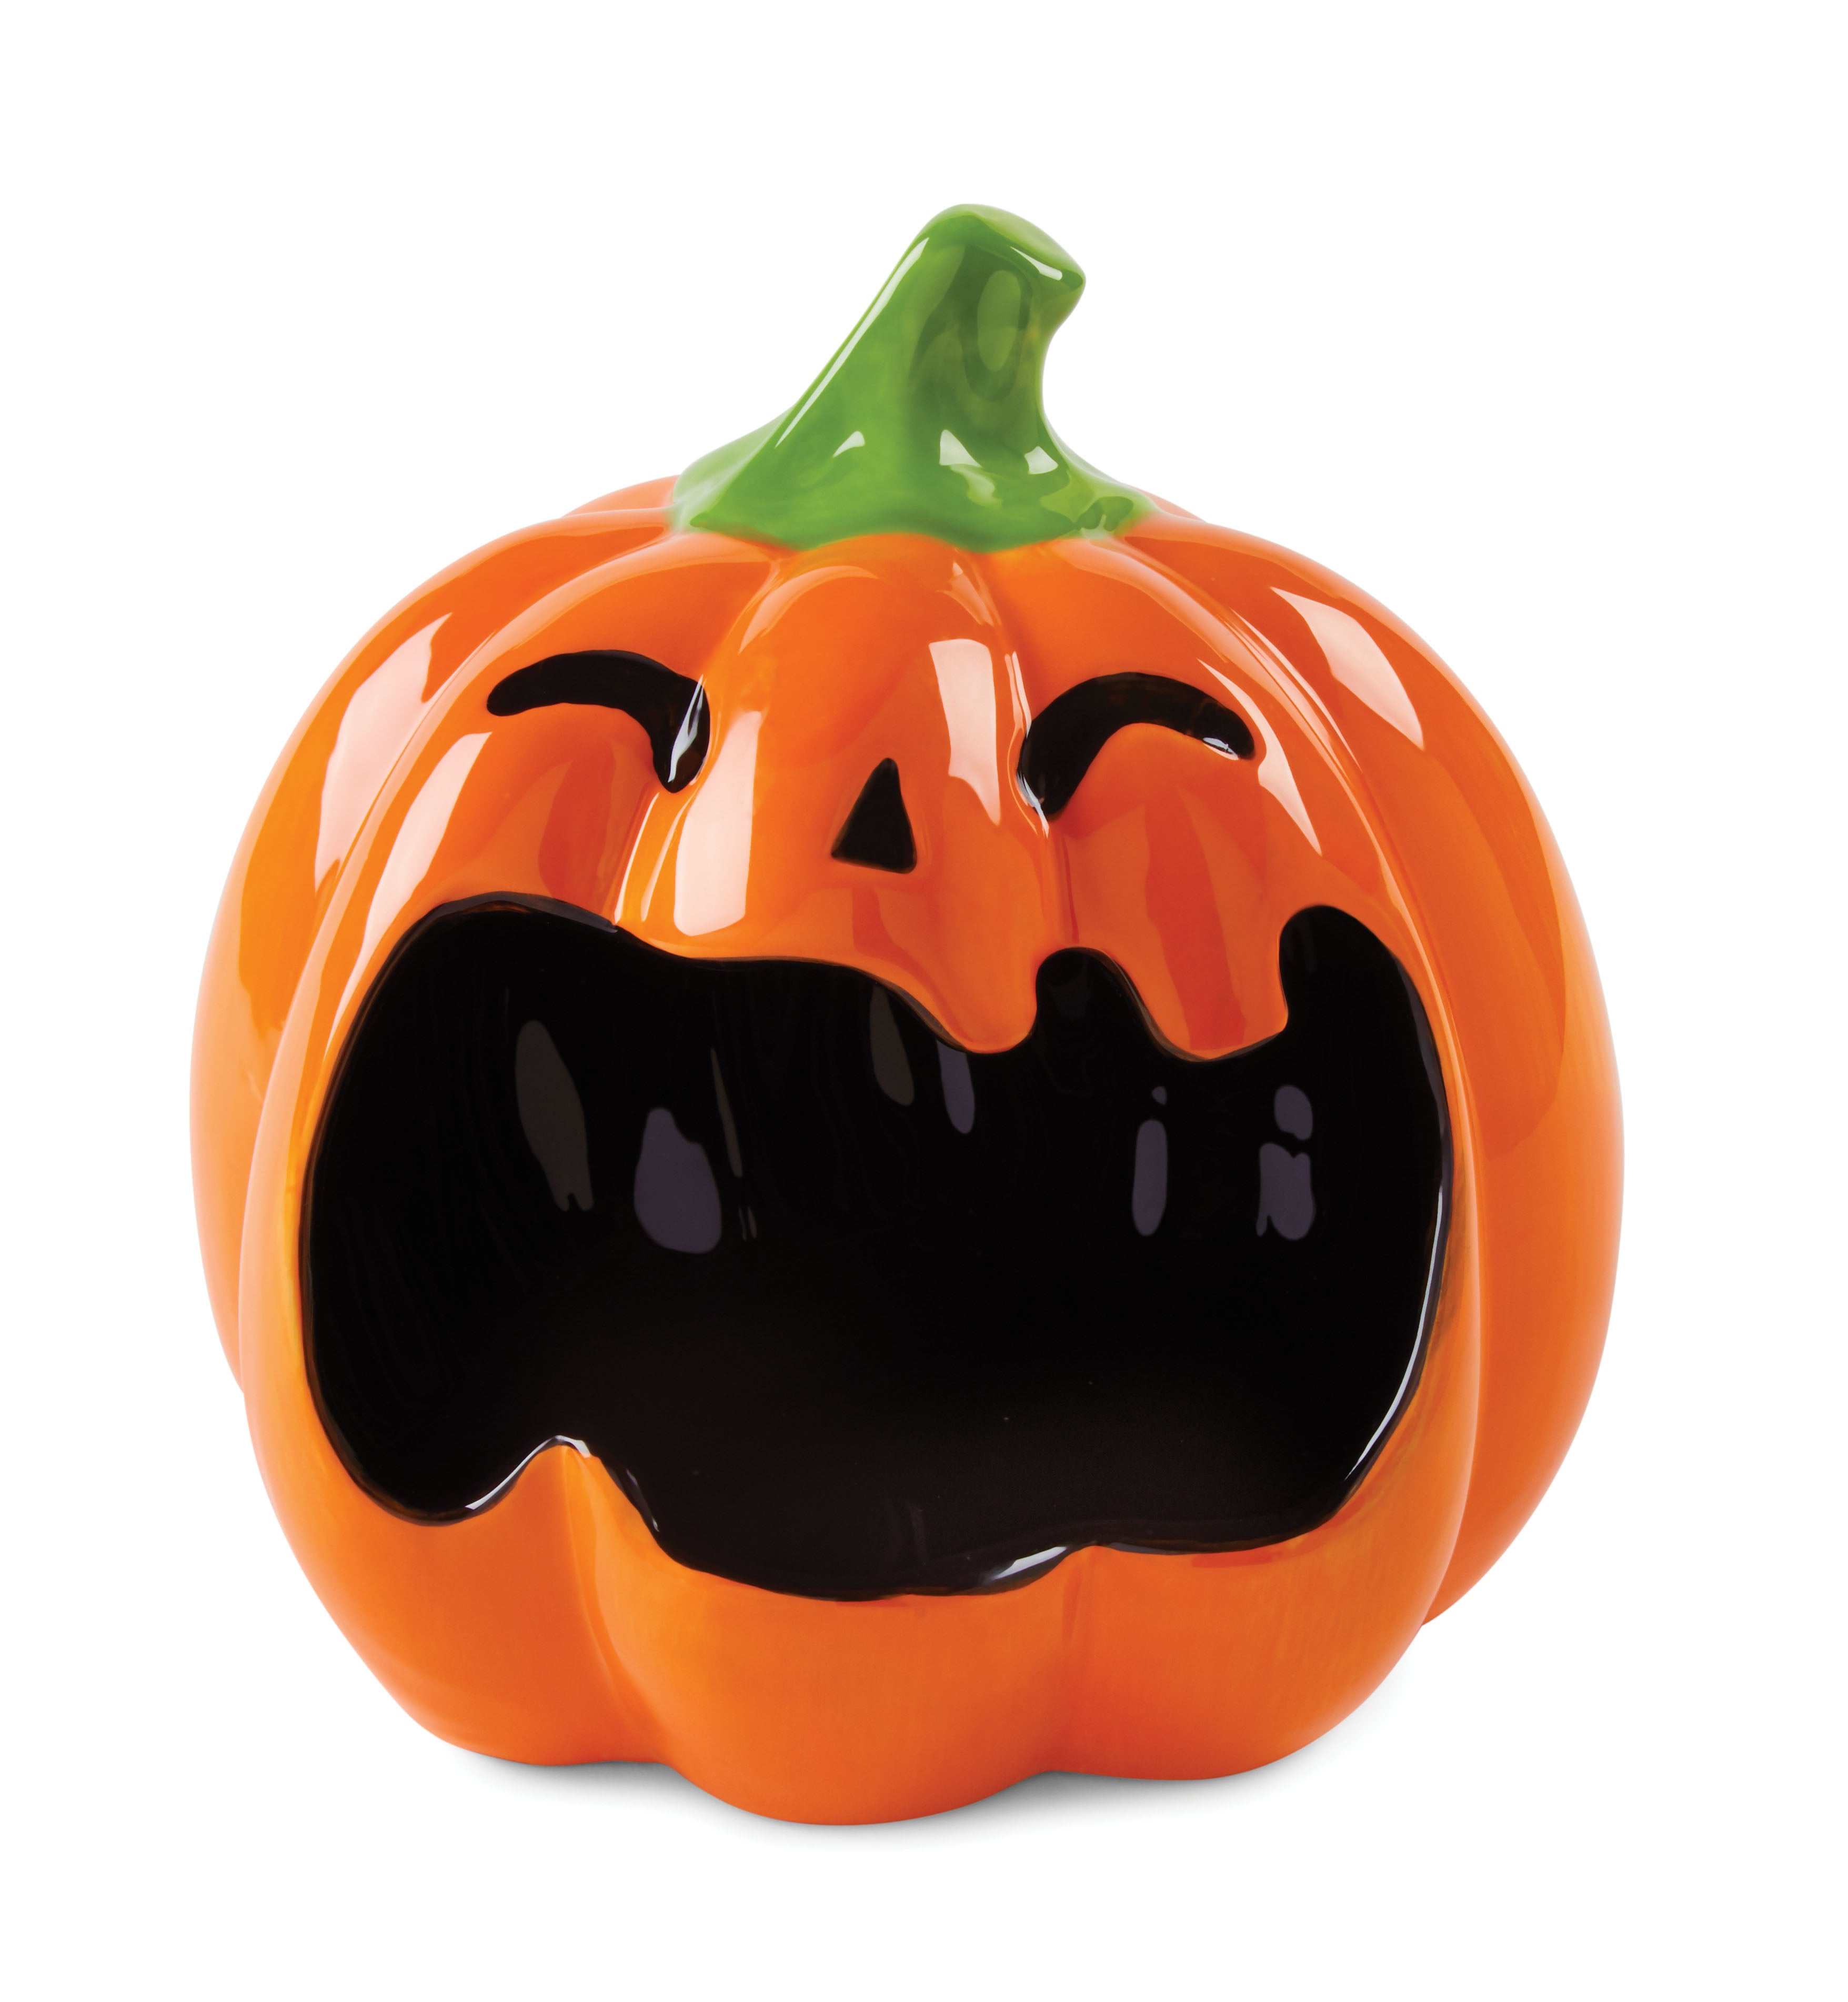 Collector's Edition Pumpkin Halloween Candy Dish